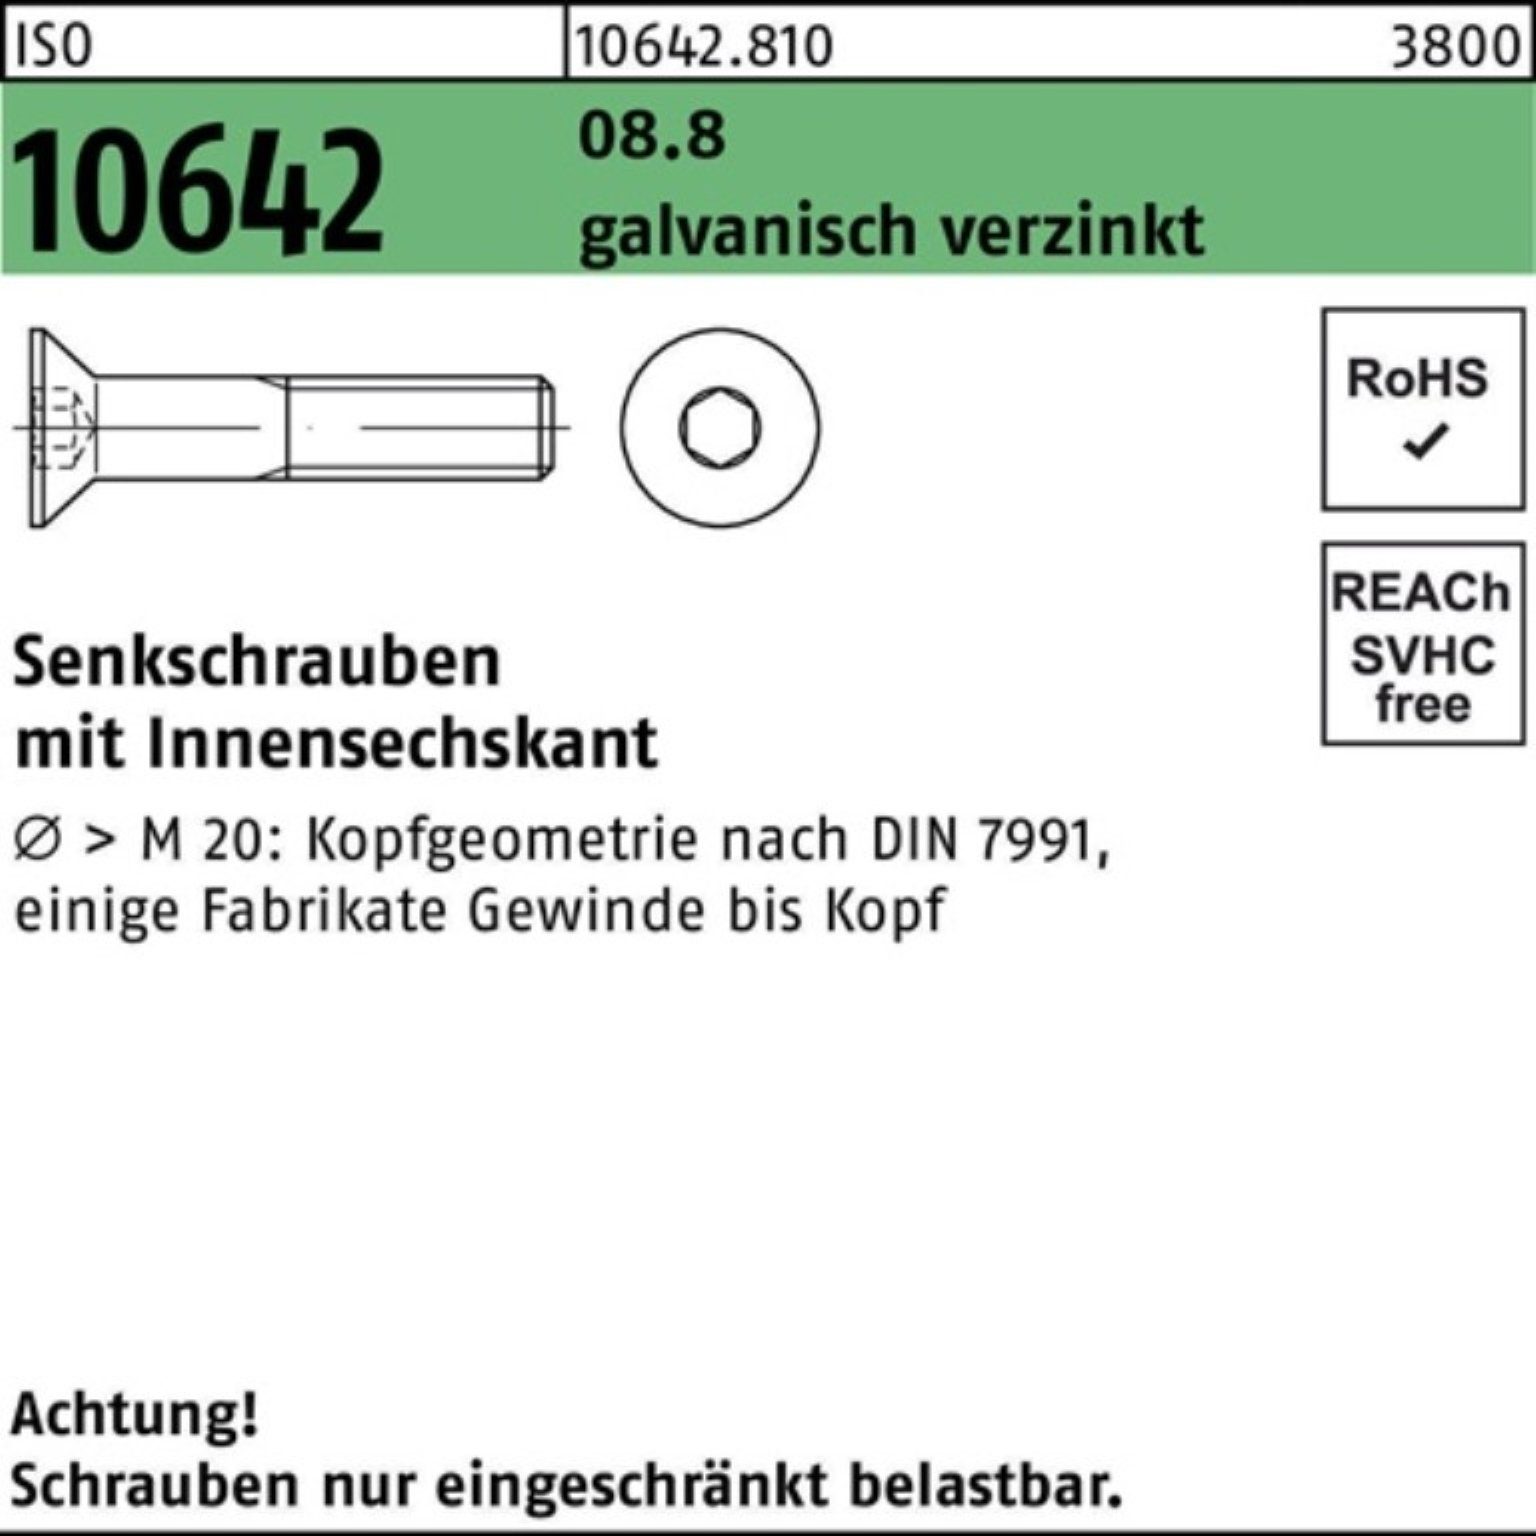 Pack 10642 Senkschraube ISO 100er Innen-6kt Senkschraube 25 M20x Reyher 40 8.8 galv.verz.